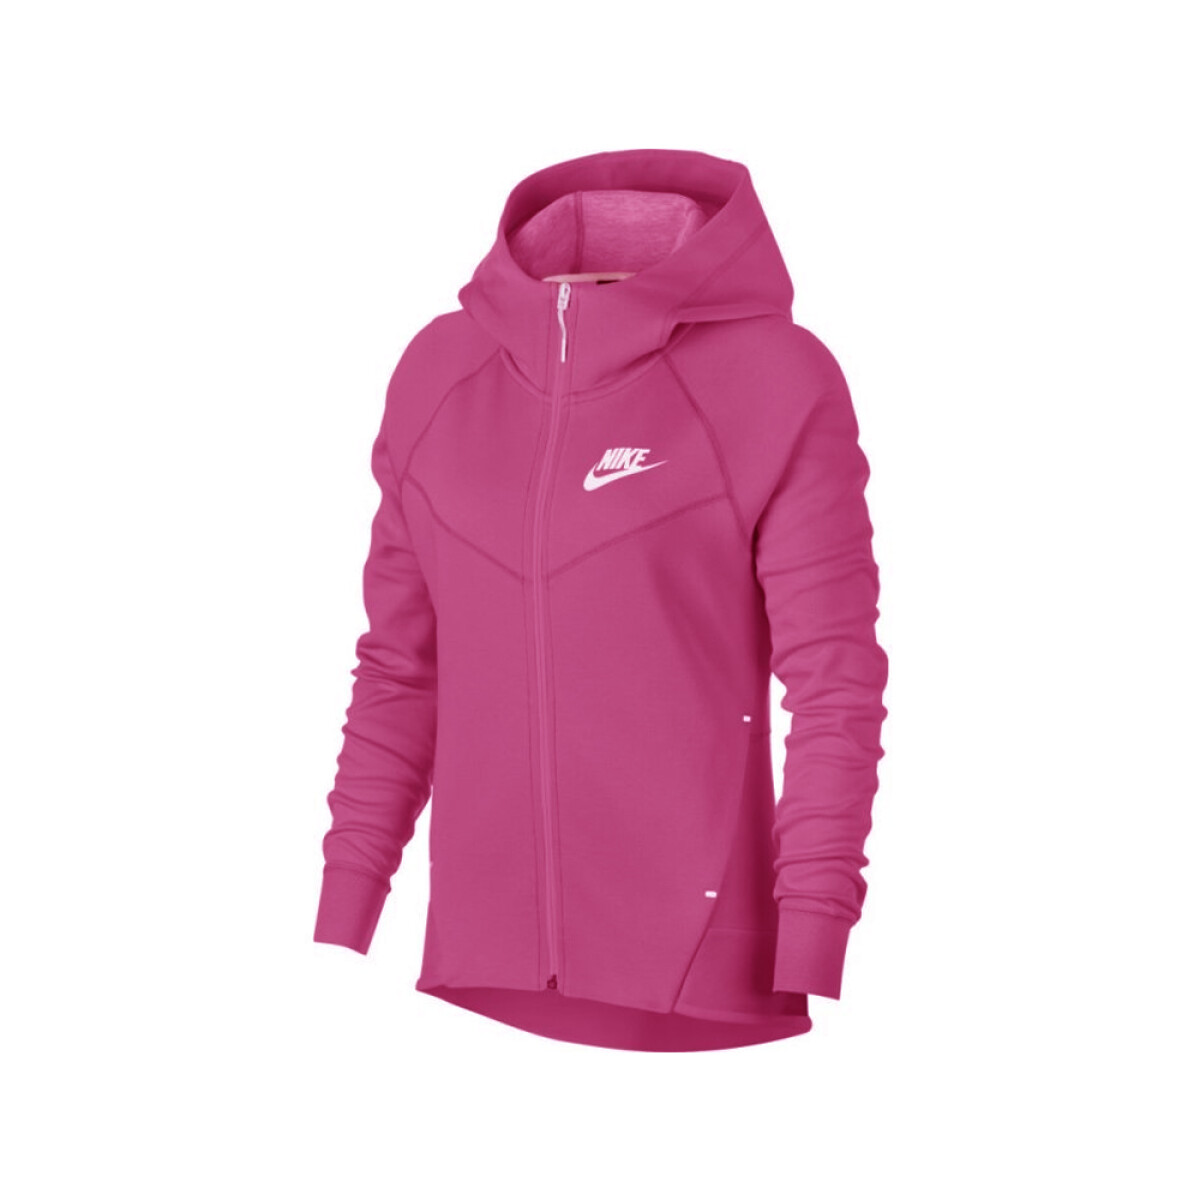 Campera Nike Windrunner Tech W - Pink 